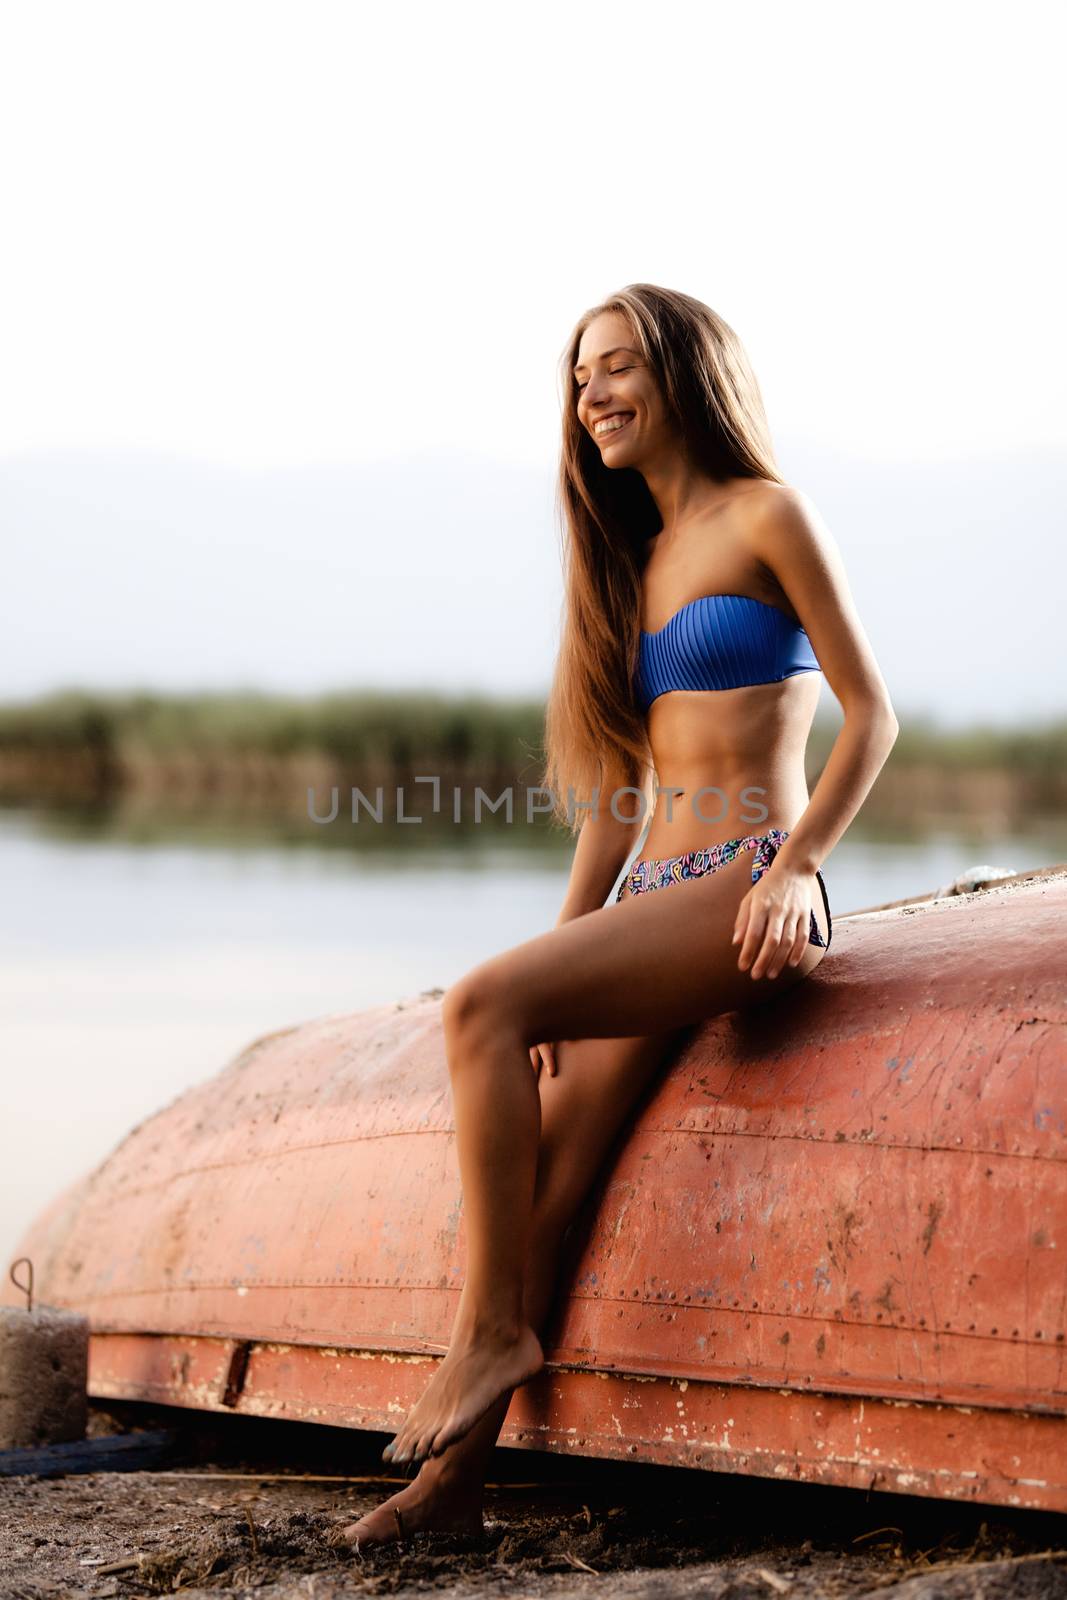 beautiful girl on an upturned rowboat smiling and enjoying a sunset